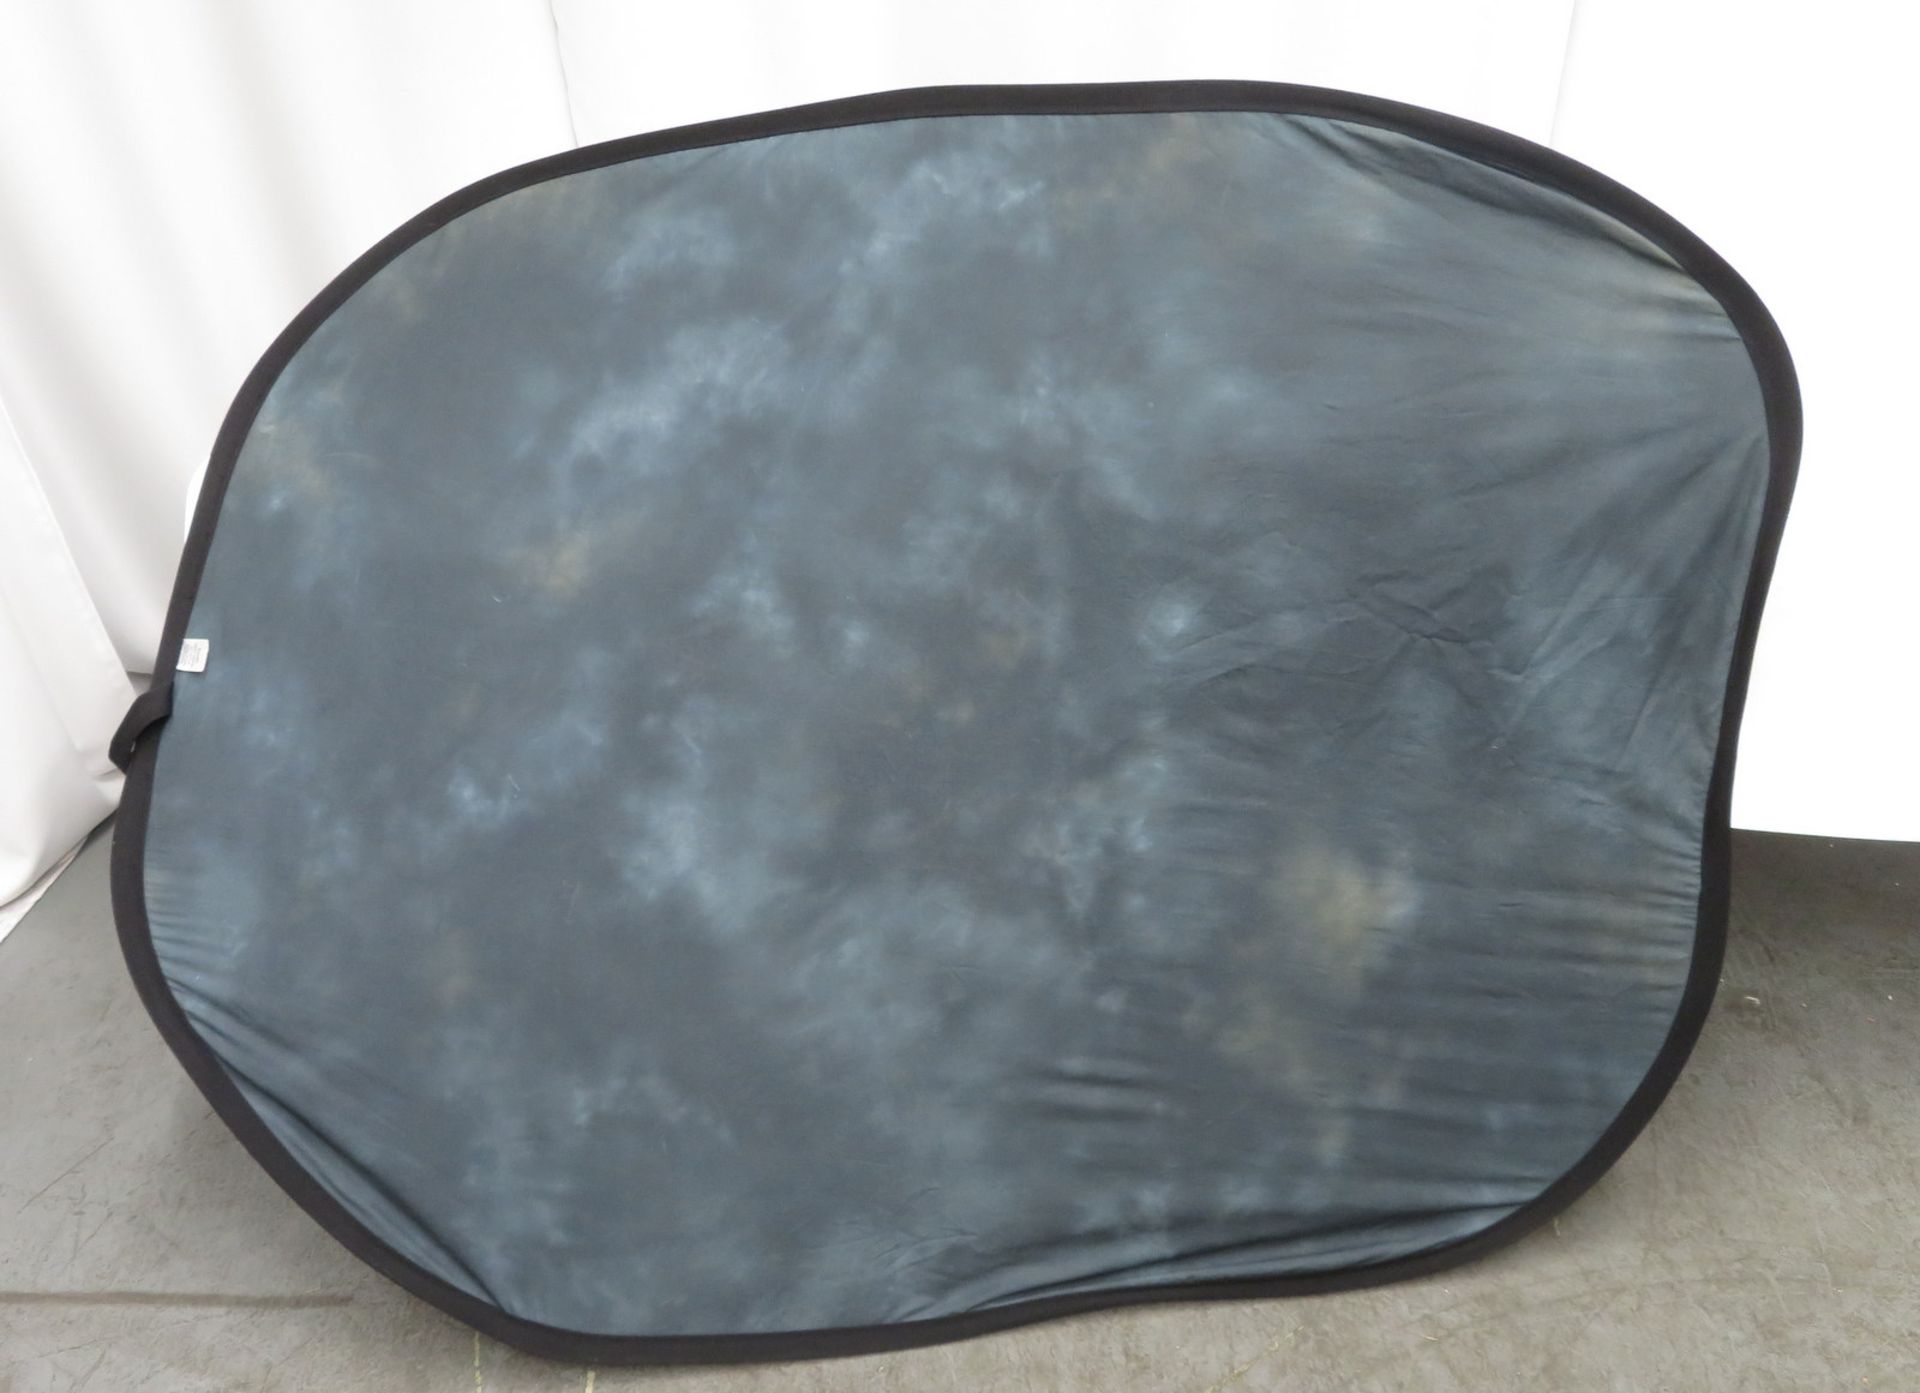 Lastolite pop up reversible background, grey / blue, 1.8m x 1.5m in carry bag